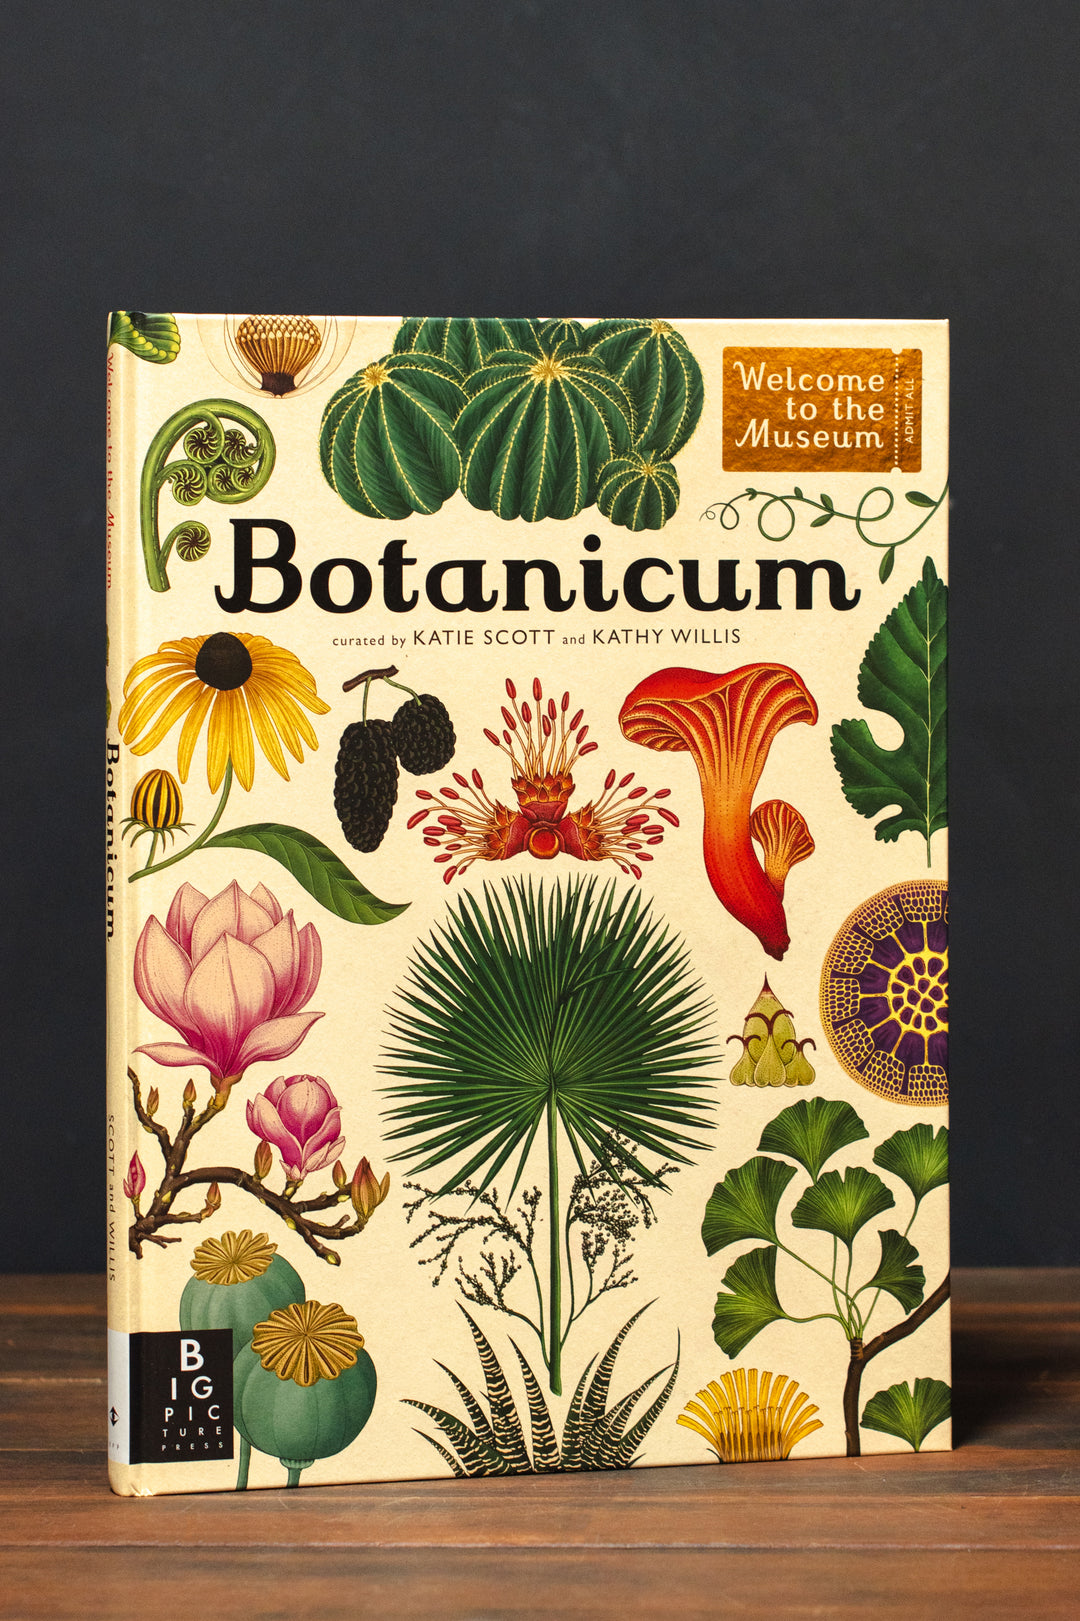 The Botanist's Sticker Anthology -- Dk 